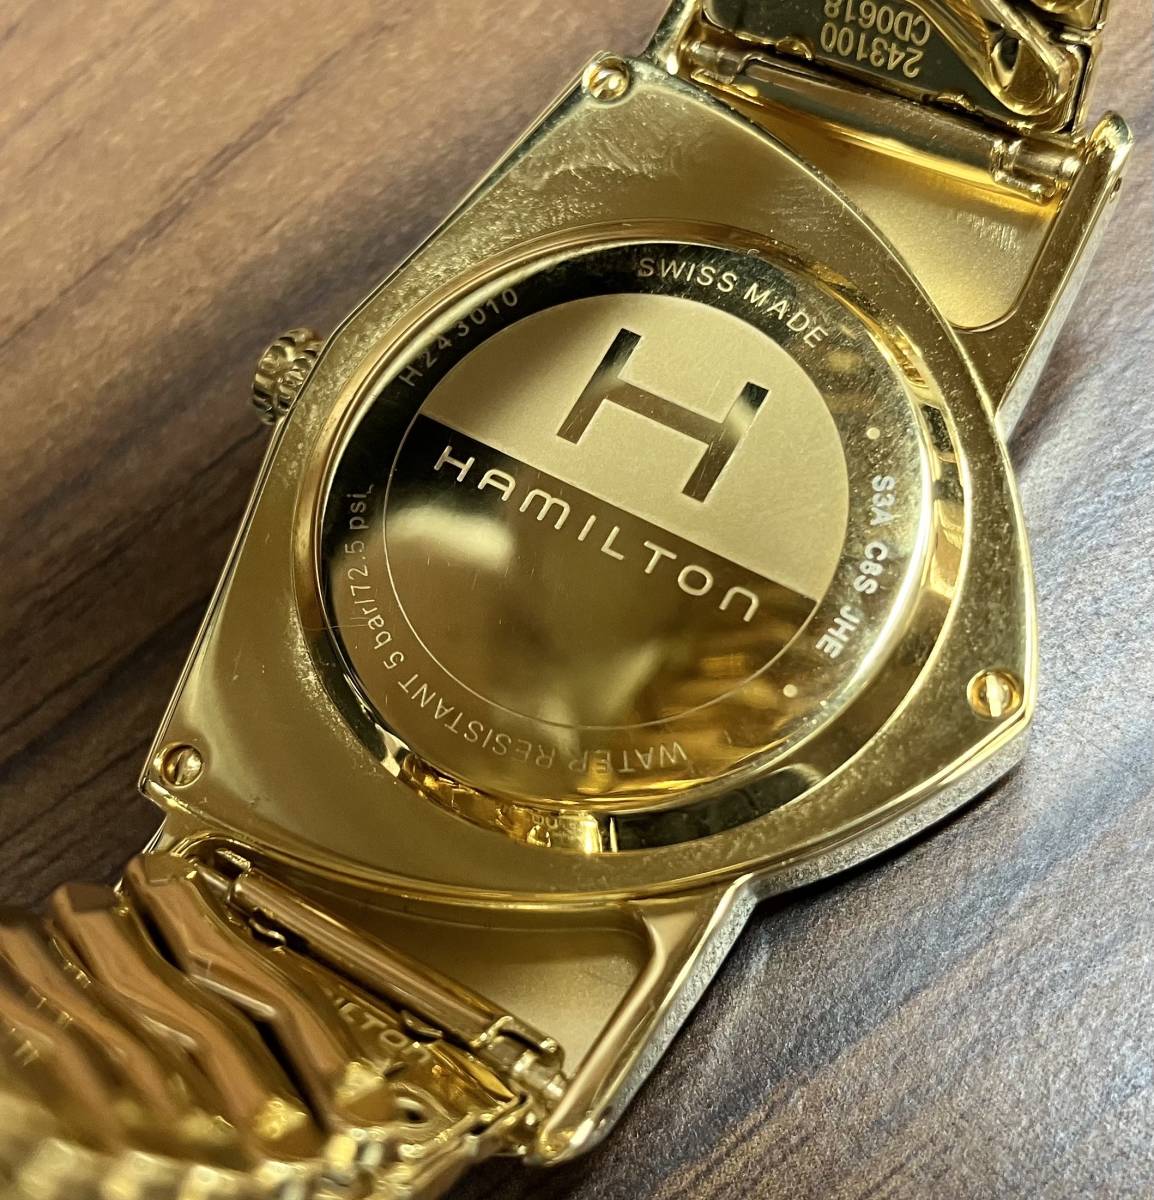 HAMILTON ハミルトン ベンチュラ クォーツ メンズ 腕時計 H243010 黒文字盤 アナログ 店舗受取可